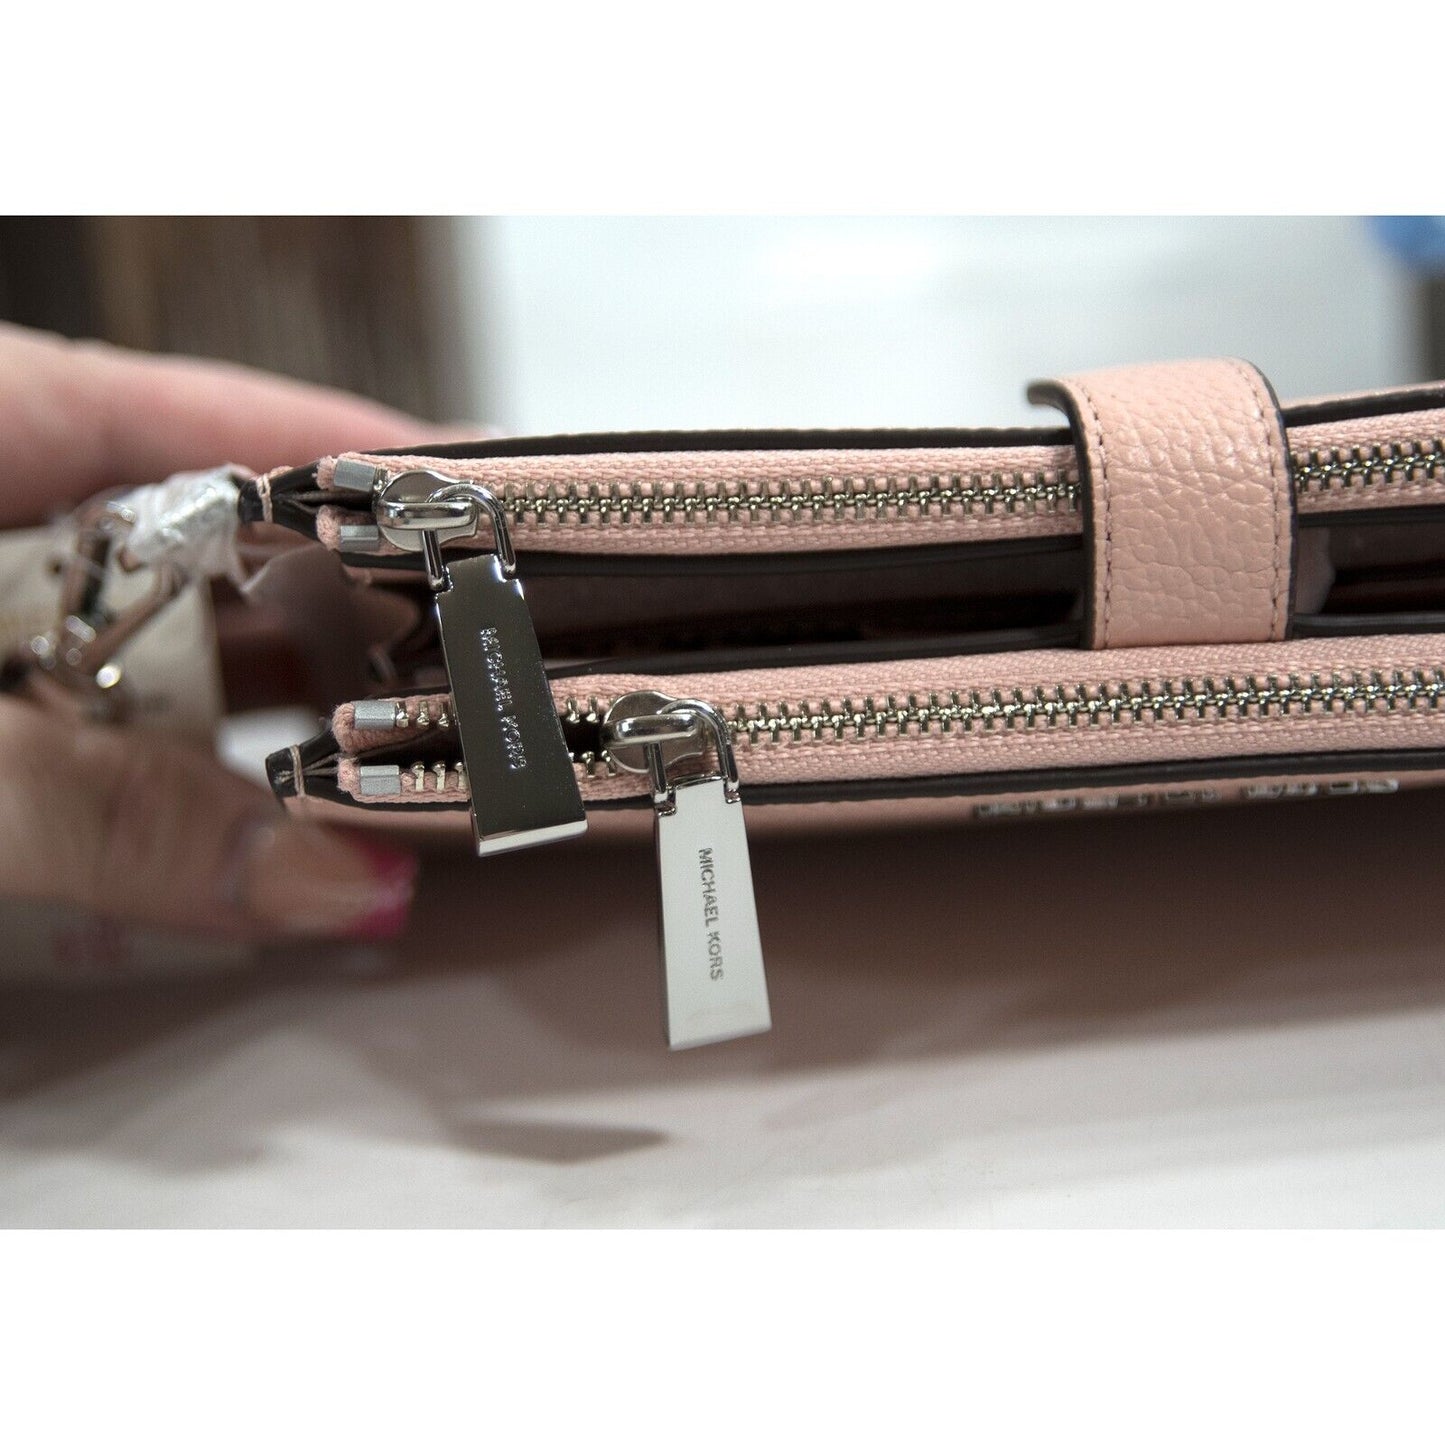 Michael Kors Jet Set Pink Pebbled Leather Double Zip Phone Wallet Wristlet NWT